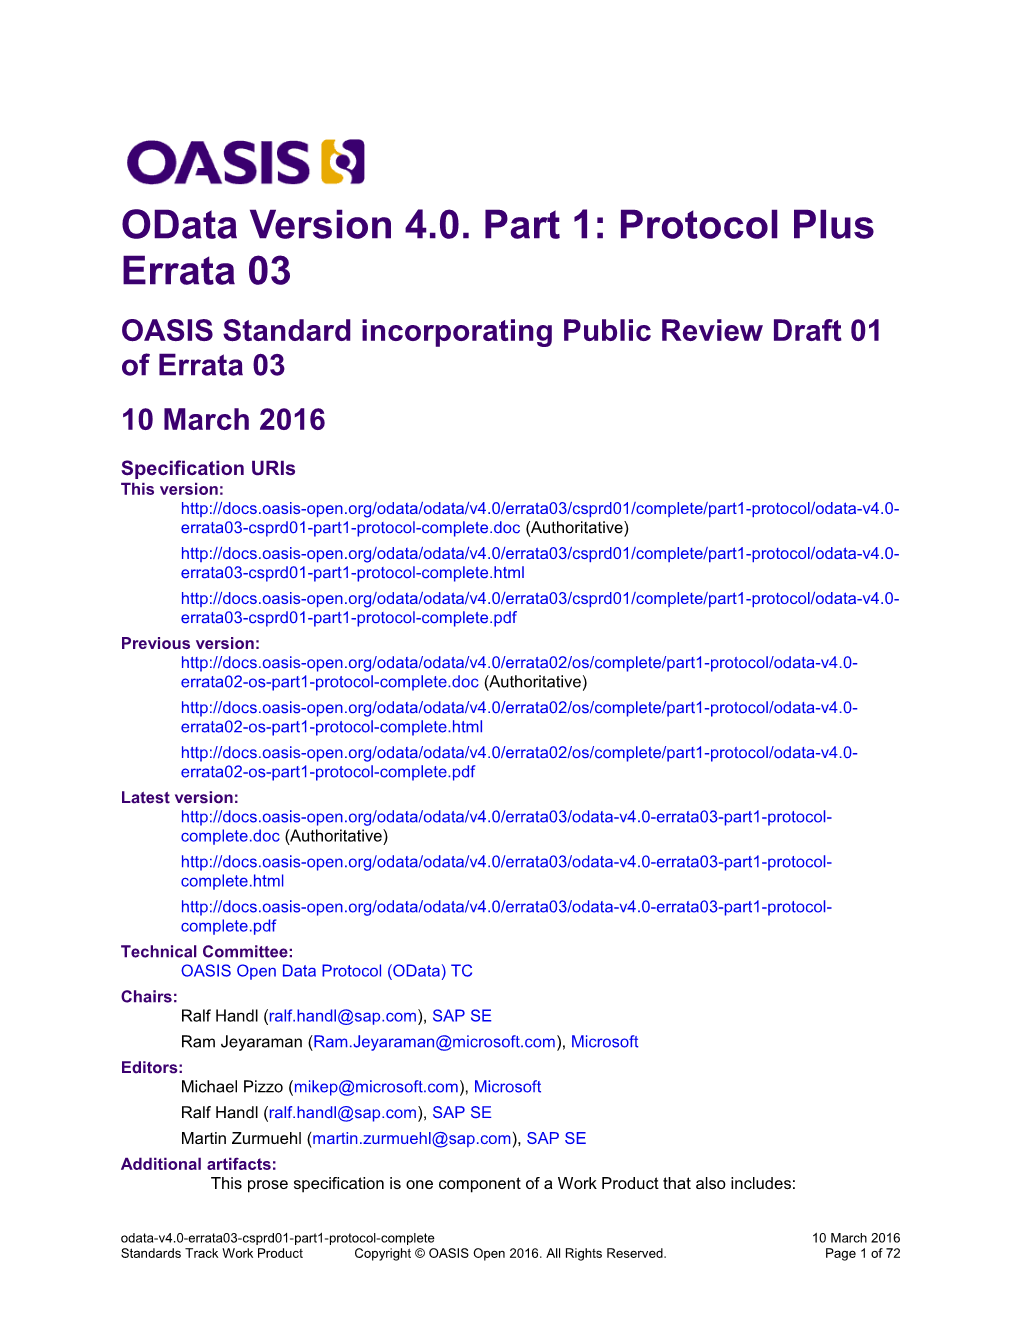 Odata Version 4.0. Part 1: Protocol Plus Errata 03